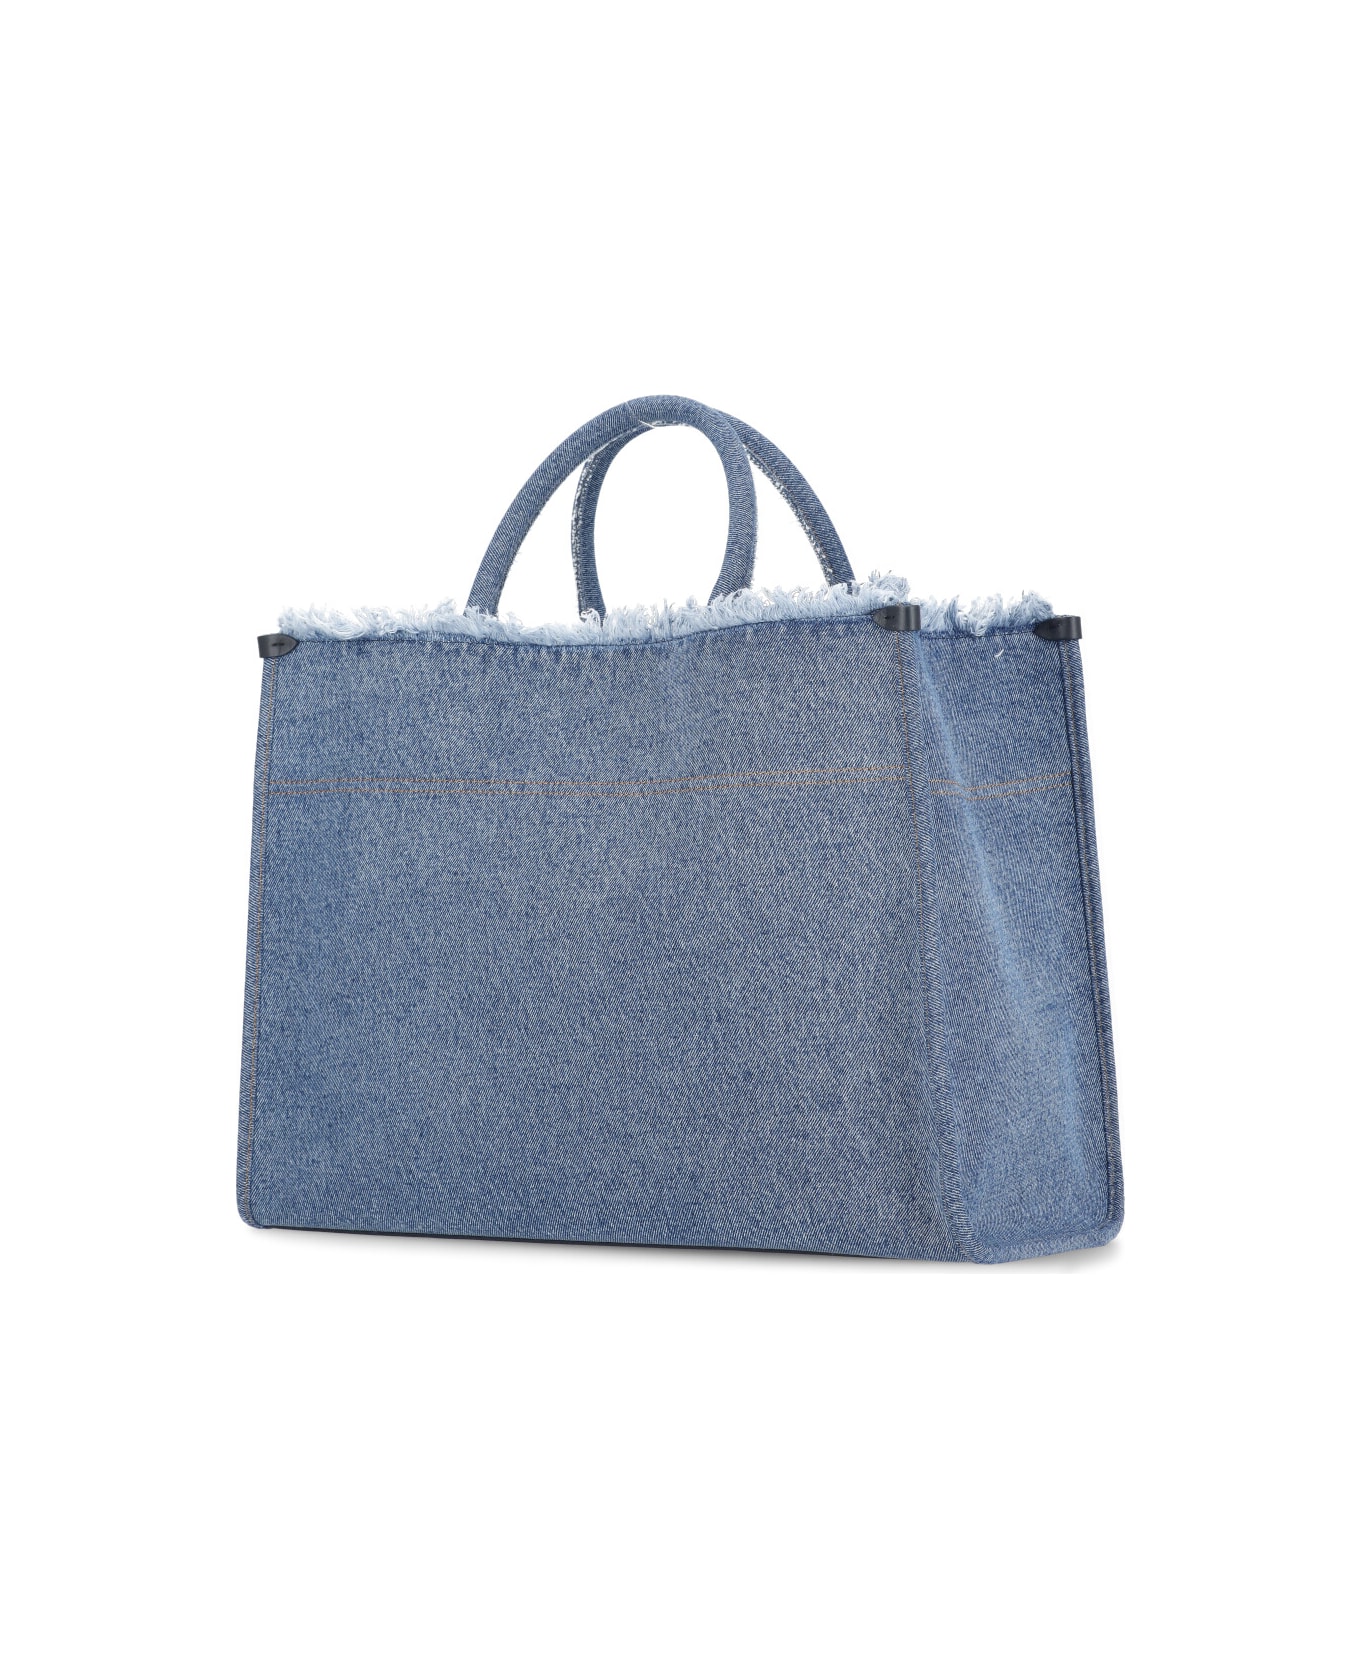 Lanvin Cotton Shopping Bag - Blue